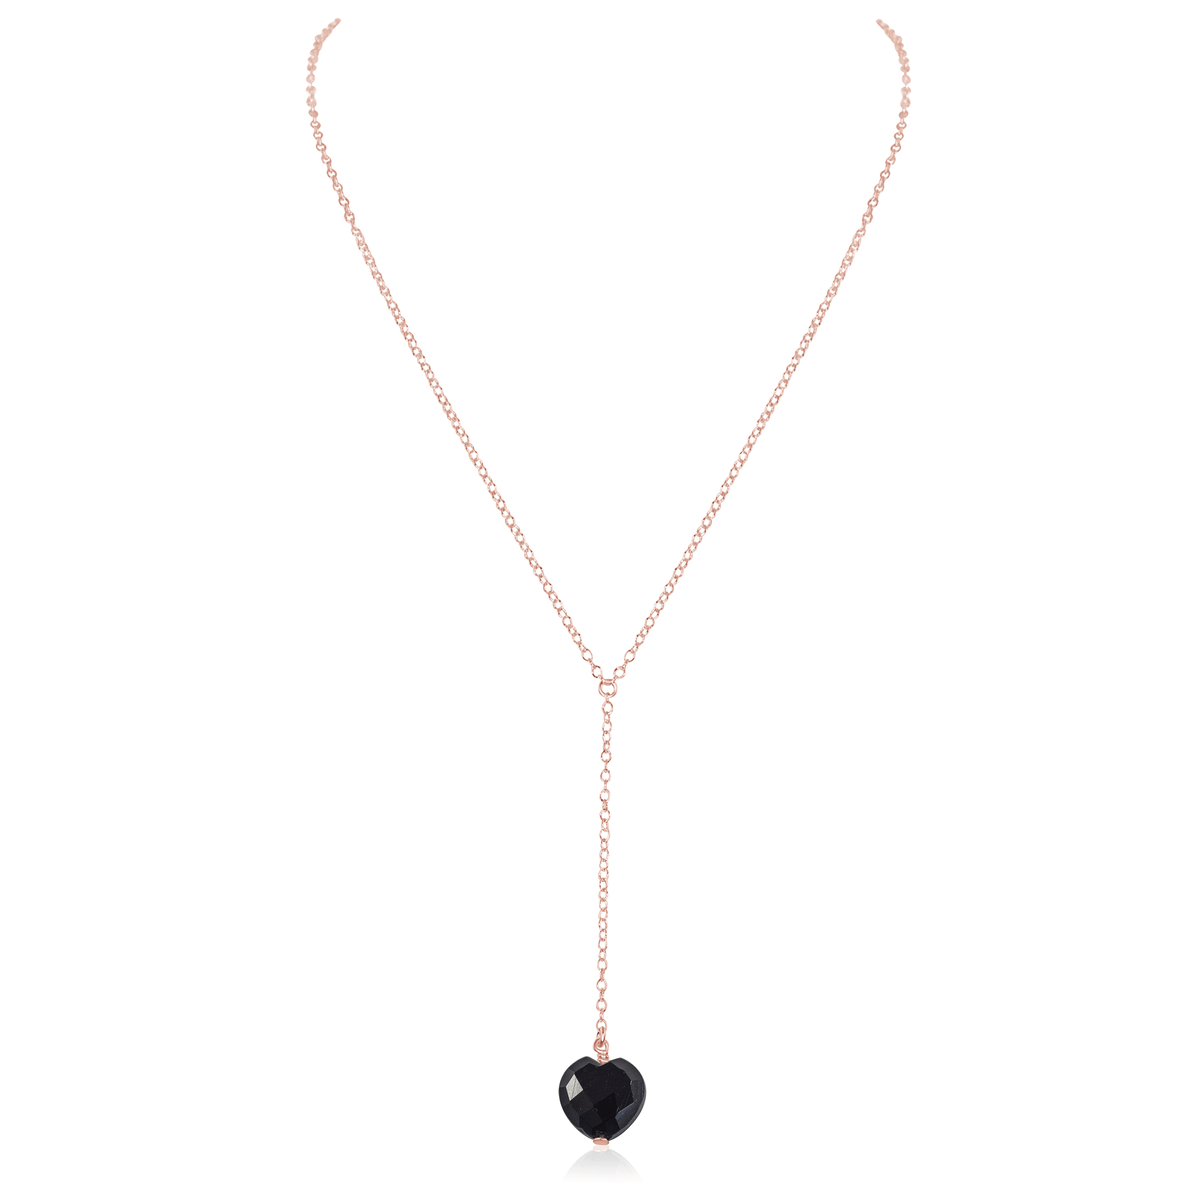 Black Onyx Crystal Heart Lariat Necklace - Black Onyx Crystal Heart Lariat Necklace - 14k Rose Gold Fill - Luna Tide Handmade Crystal Jewellery